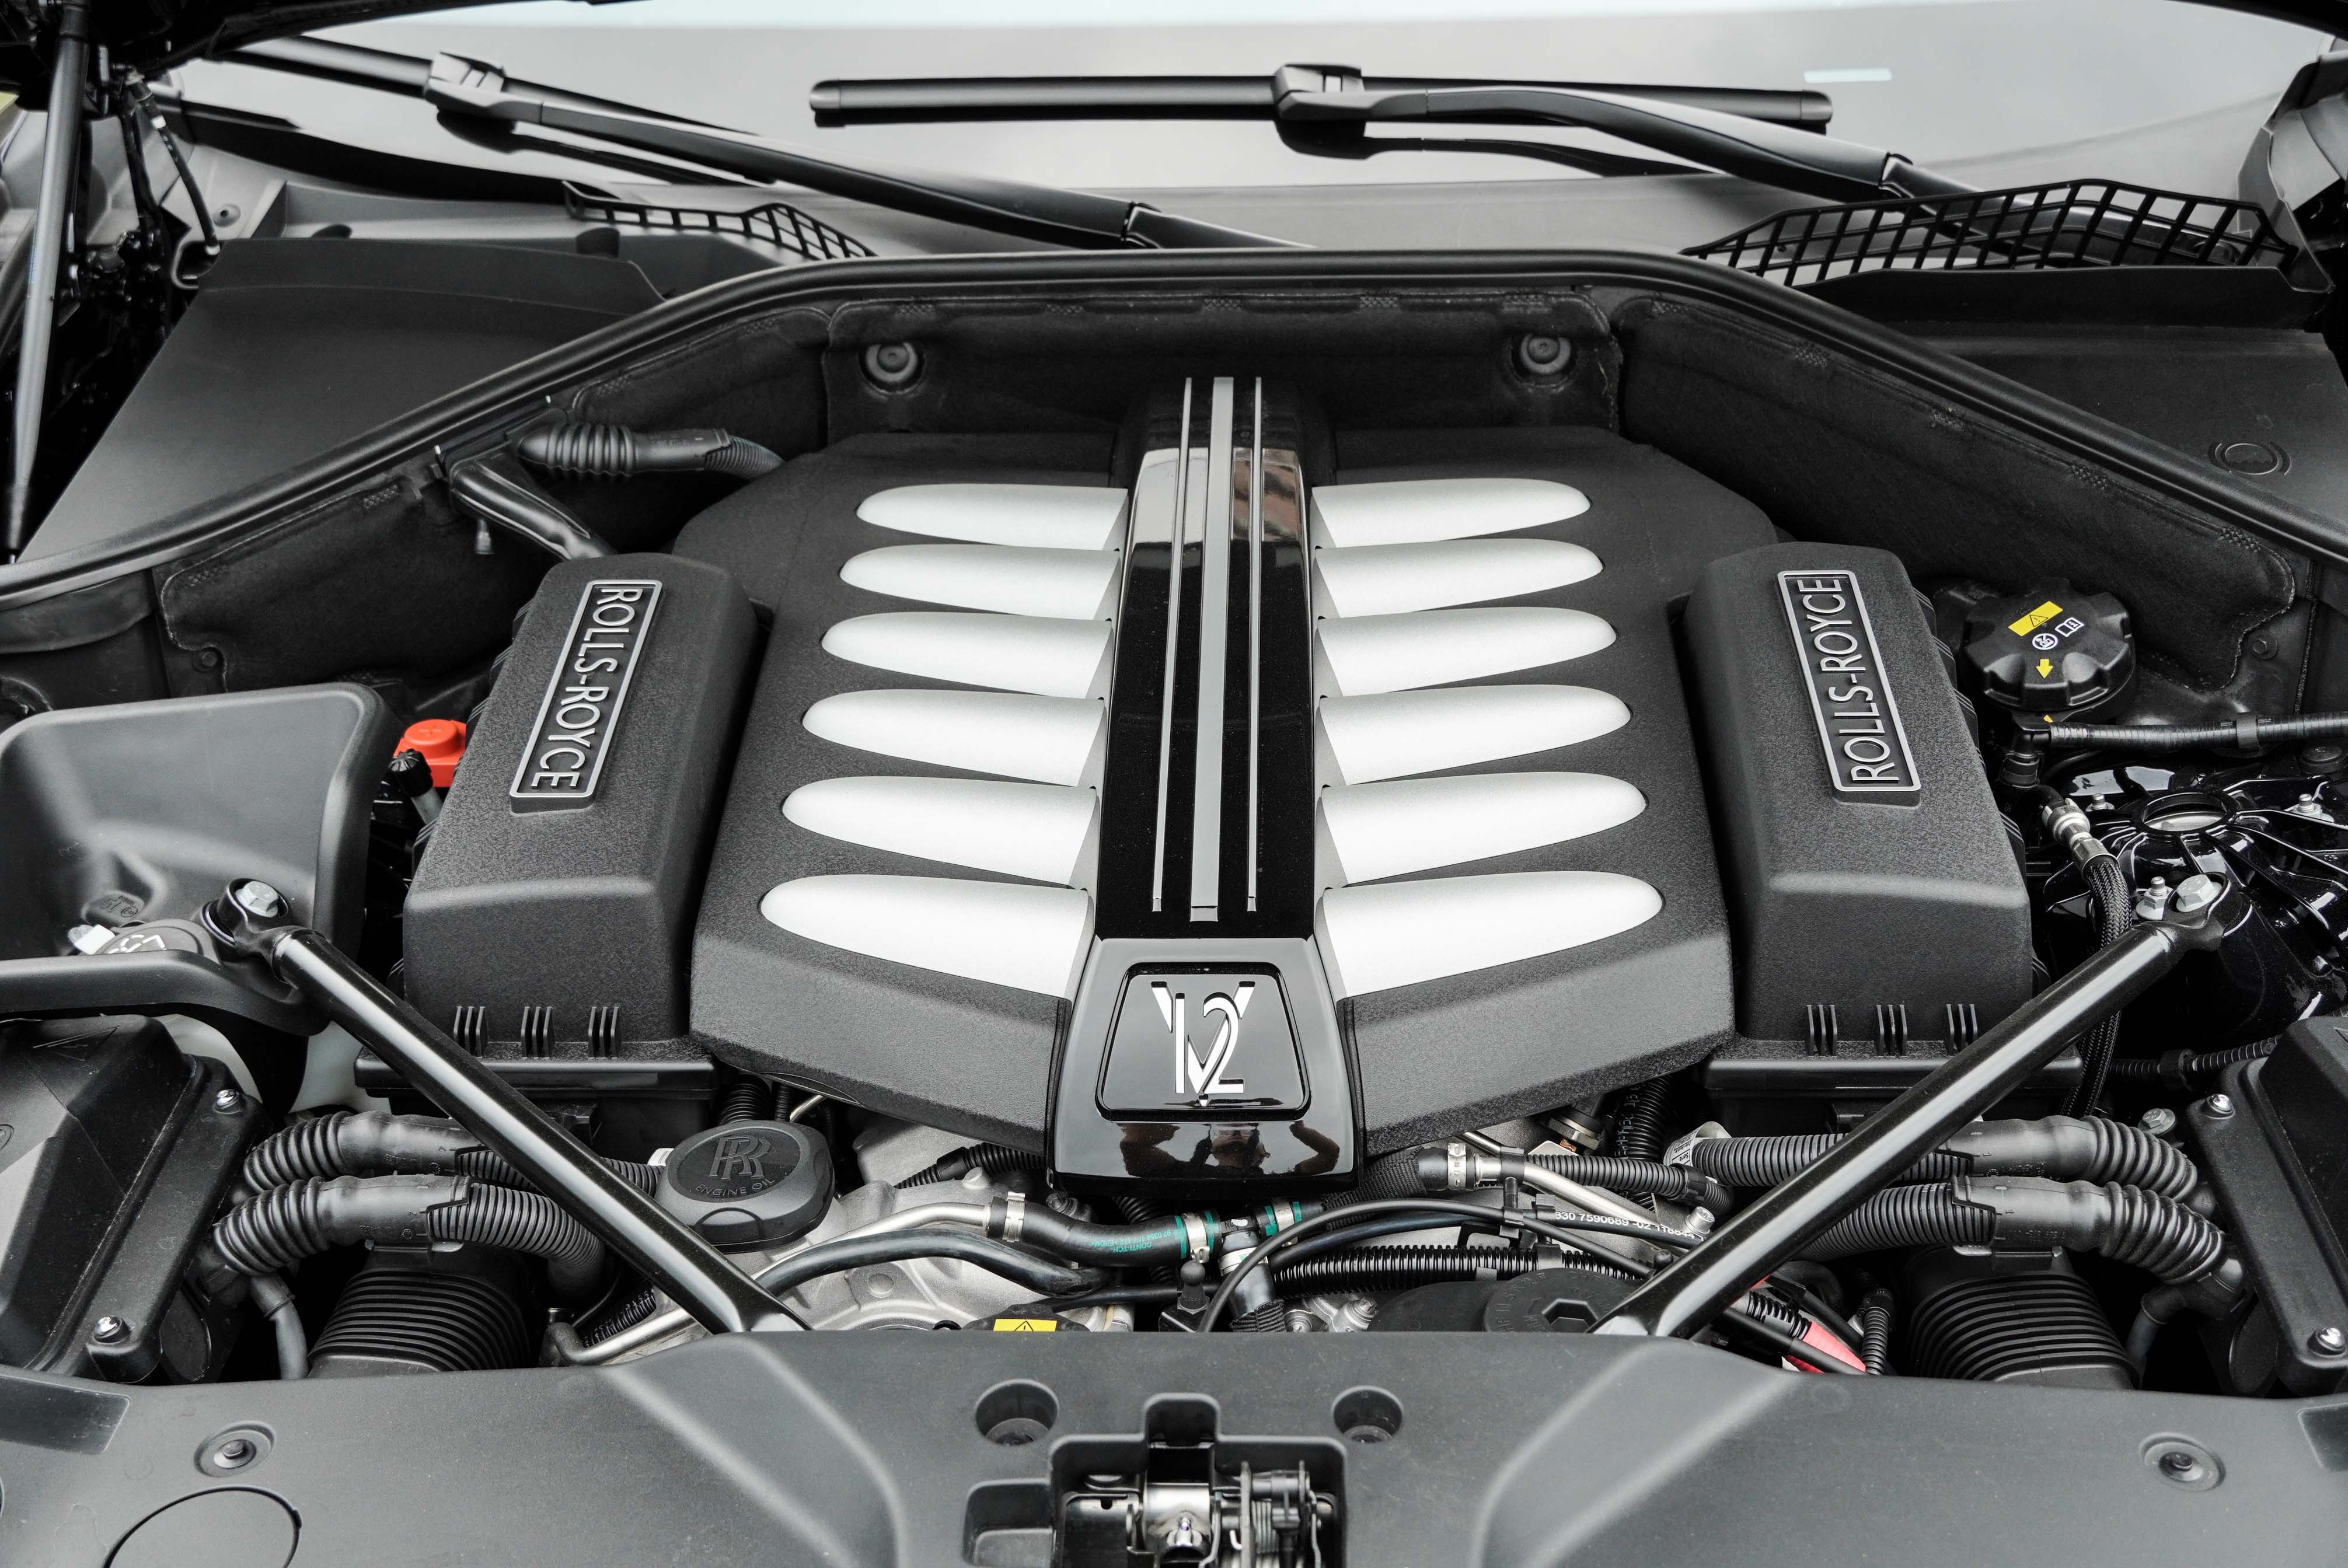 V12 渦輪增壓引擎具備 624 匹馬力及 800 牛頓米扭力。